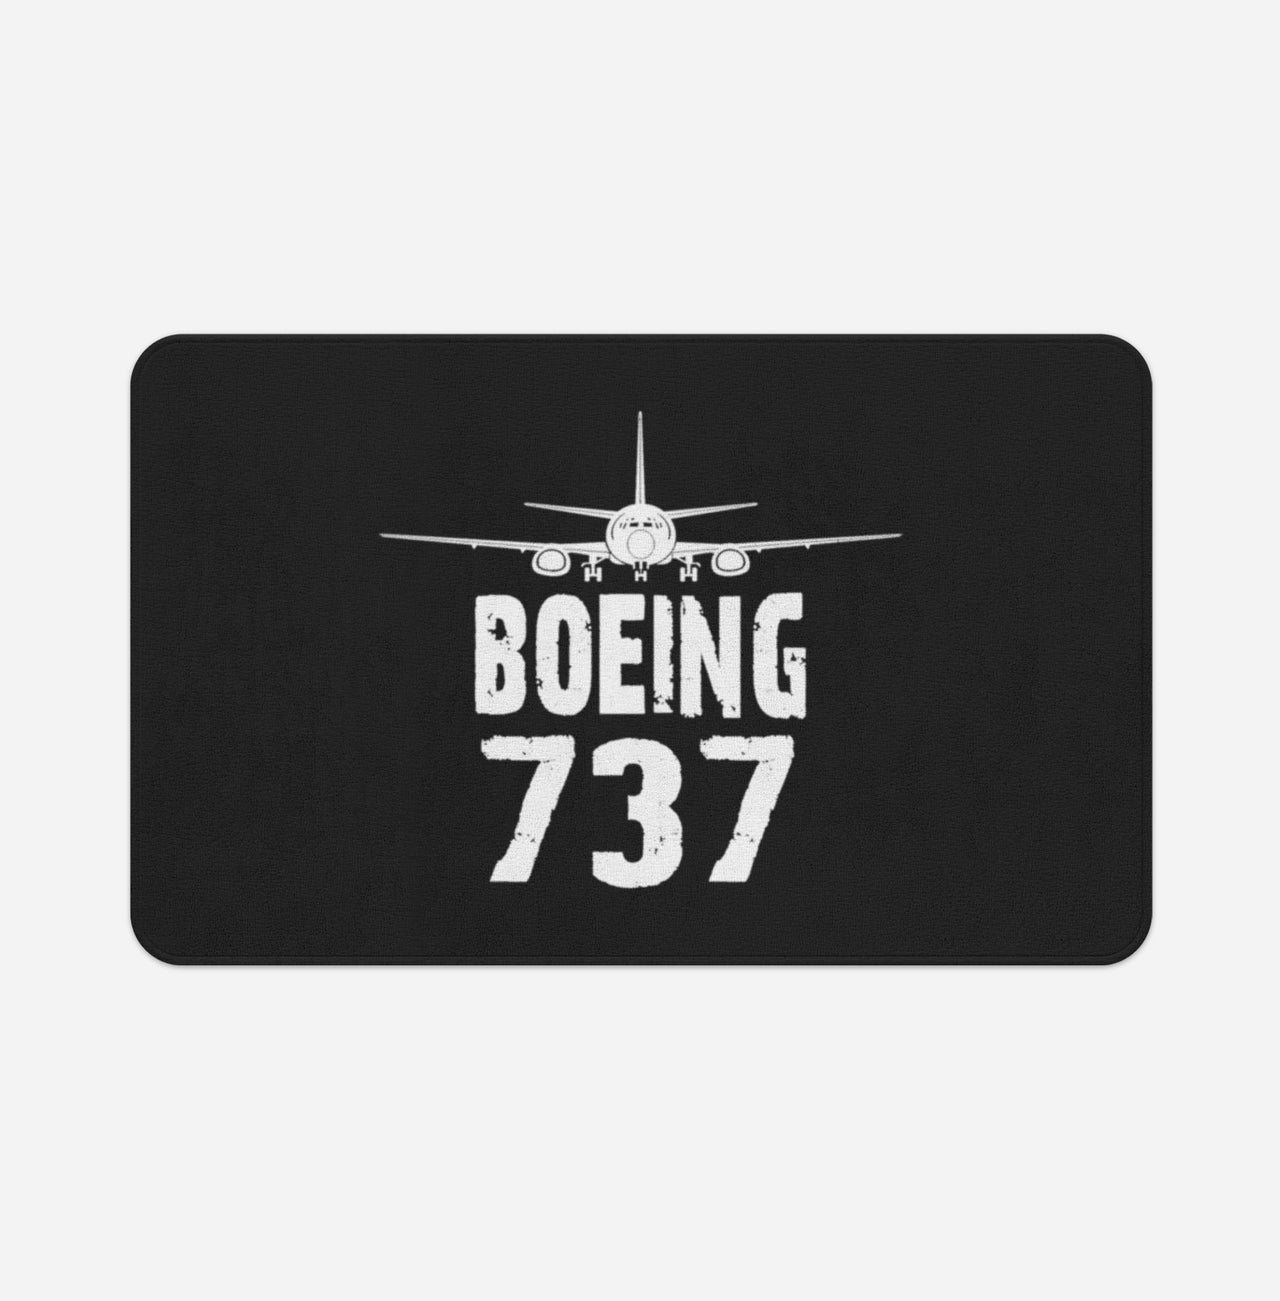 Boeing 737 & Plane Designed Bath Mats